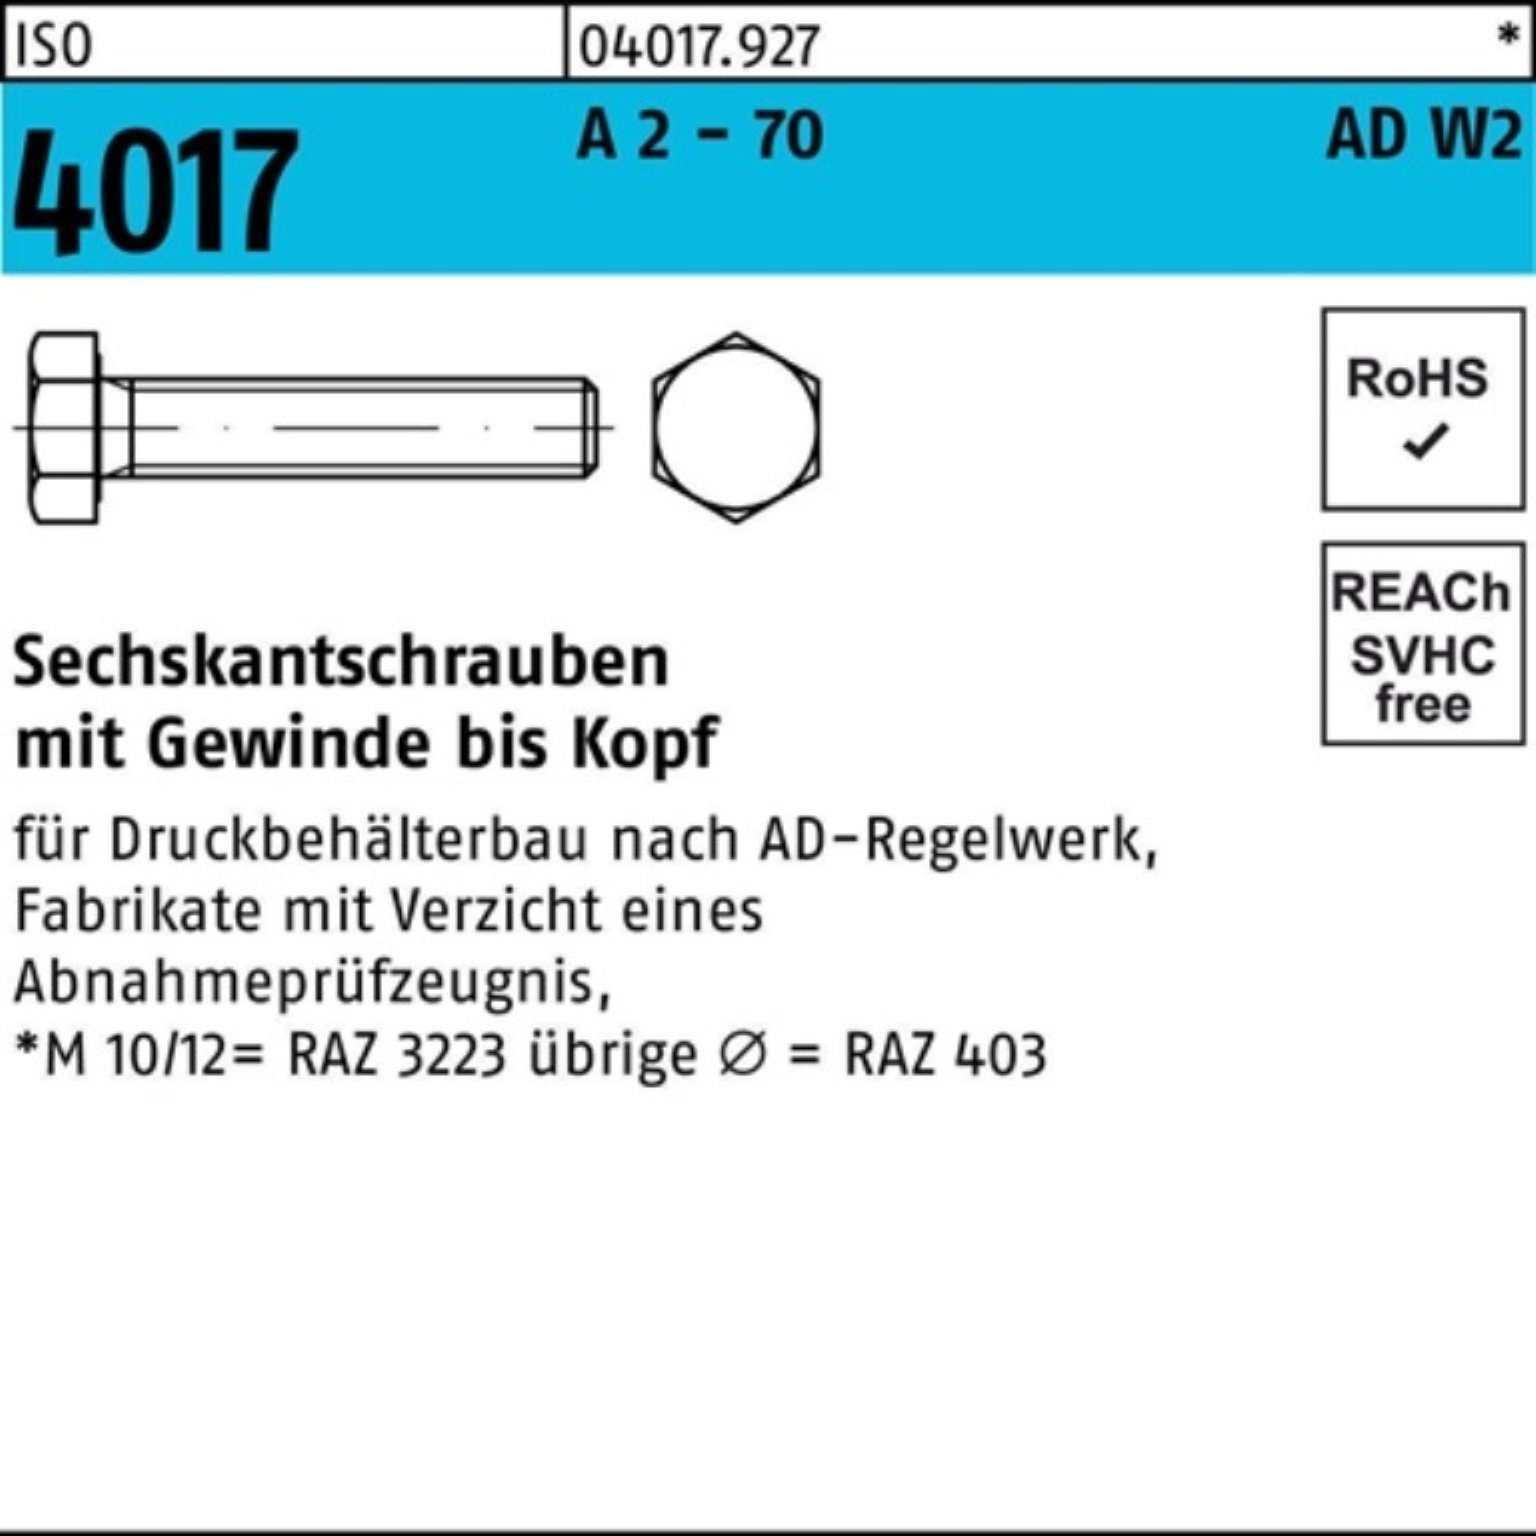 Bufab Sechskantschraube 100er Pack Sechskantschraube ISO 4017 VG M16x 65 A 2 - 70 AD-W2 25 St